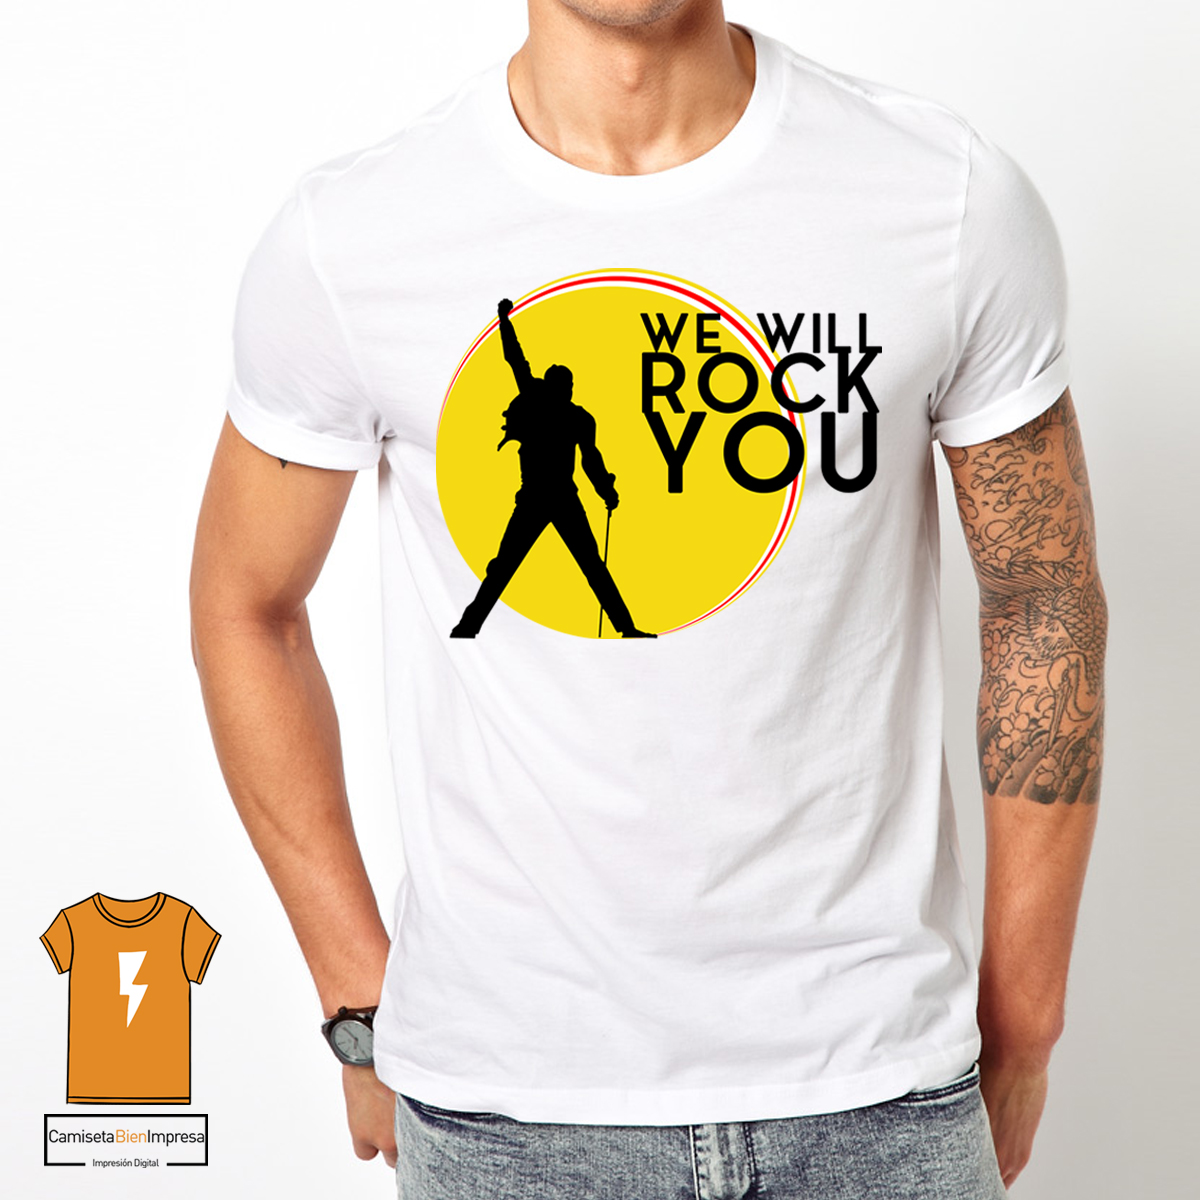 We Will You Camiseta Bien Impresa